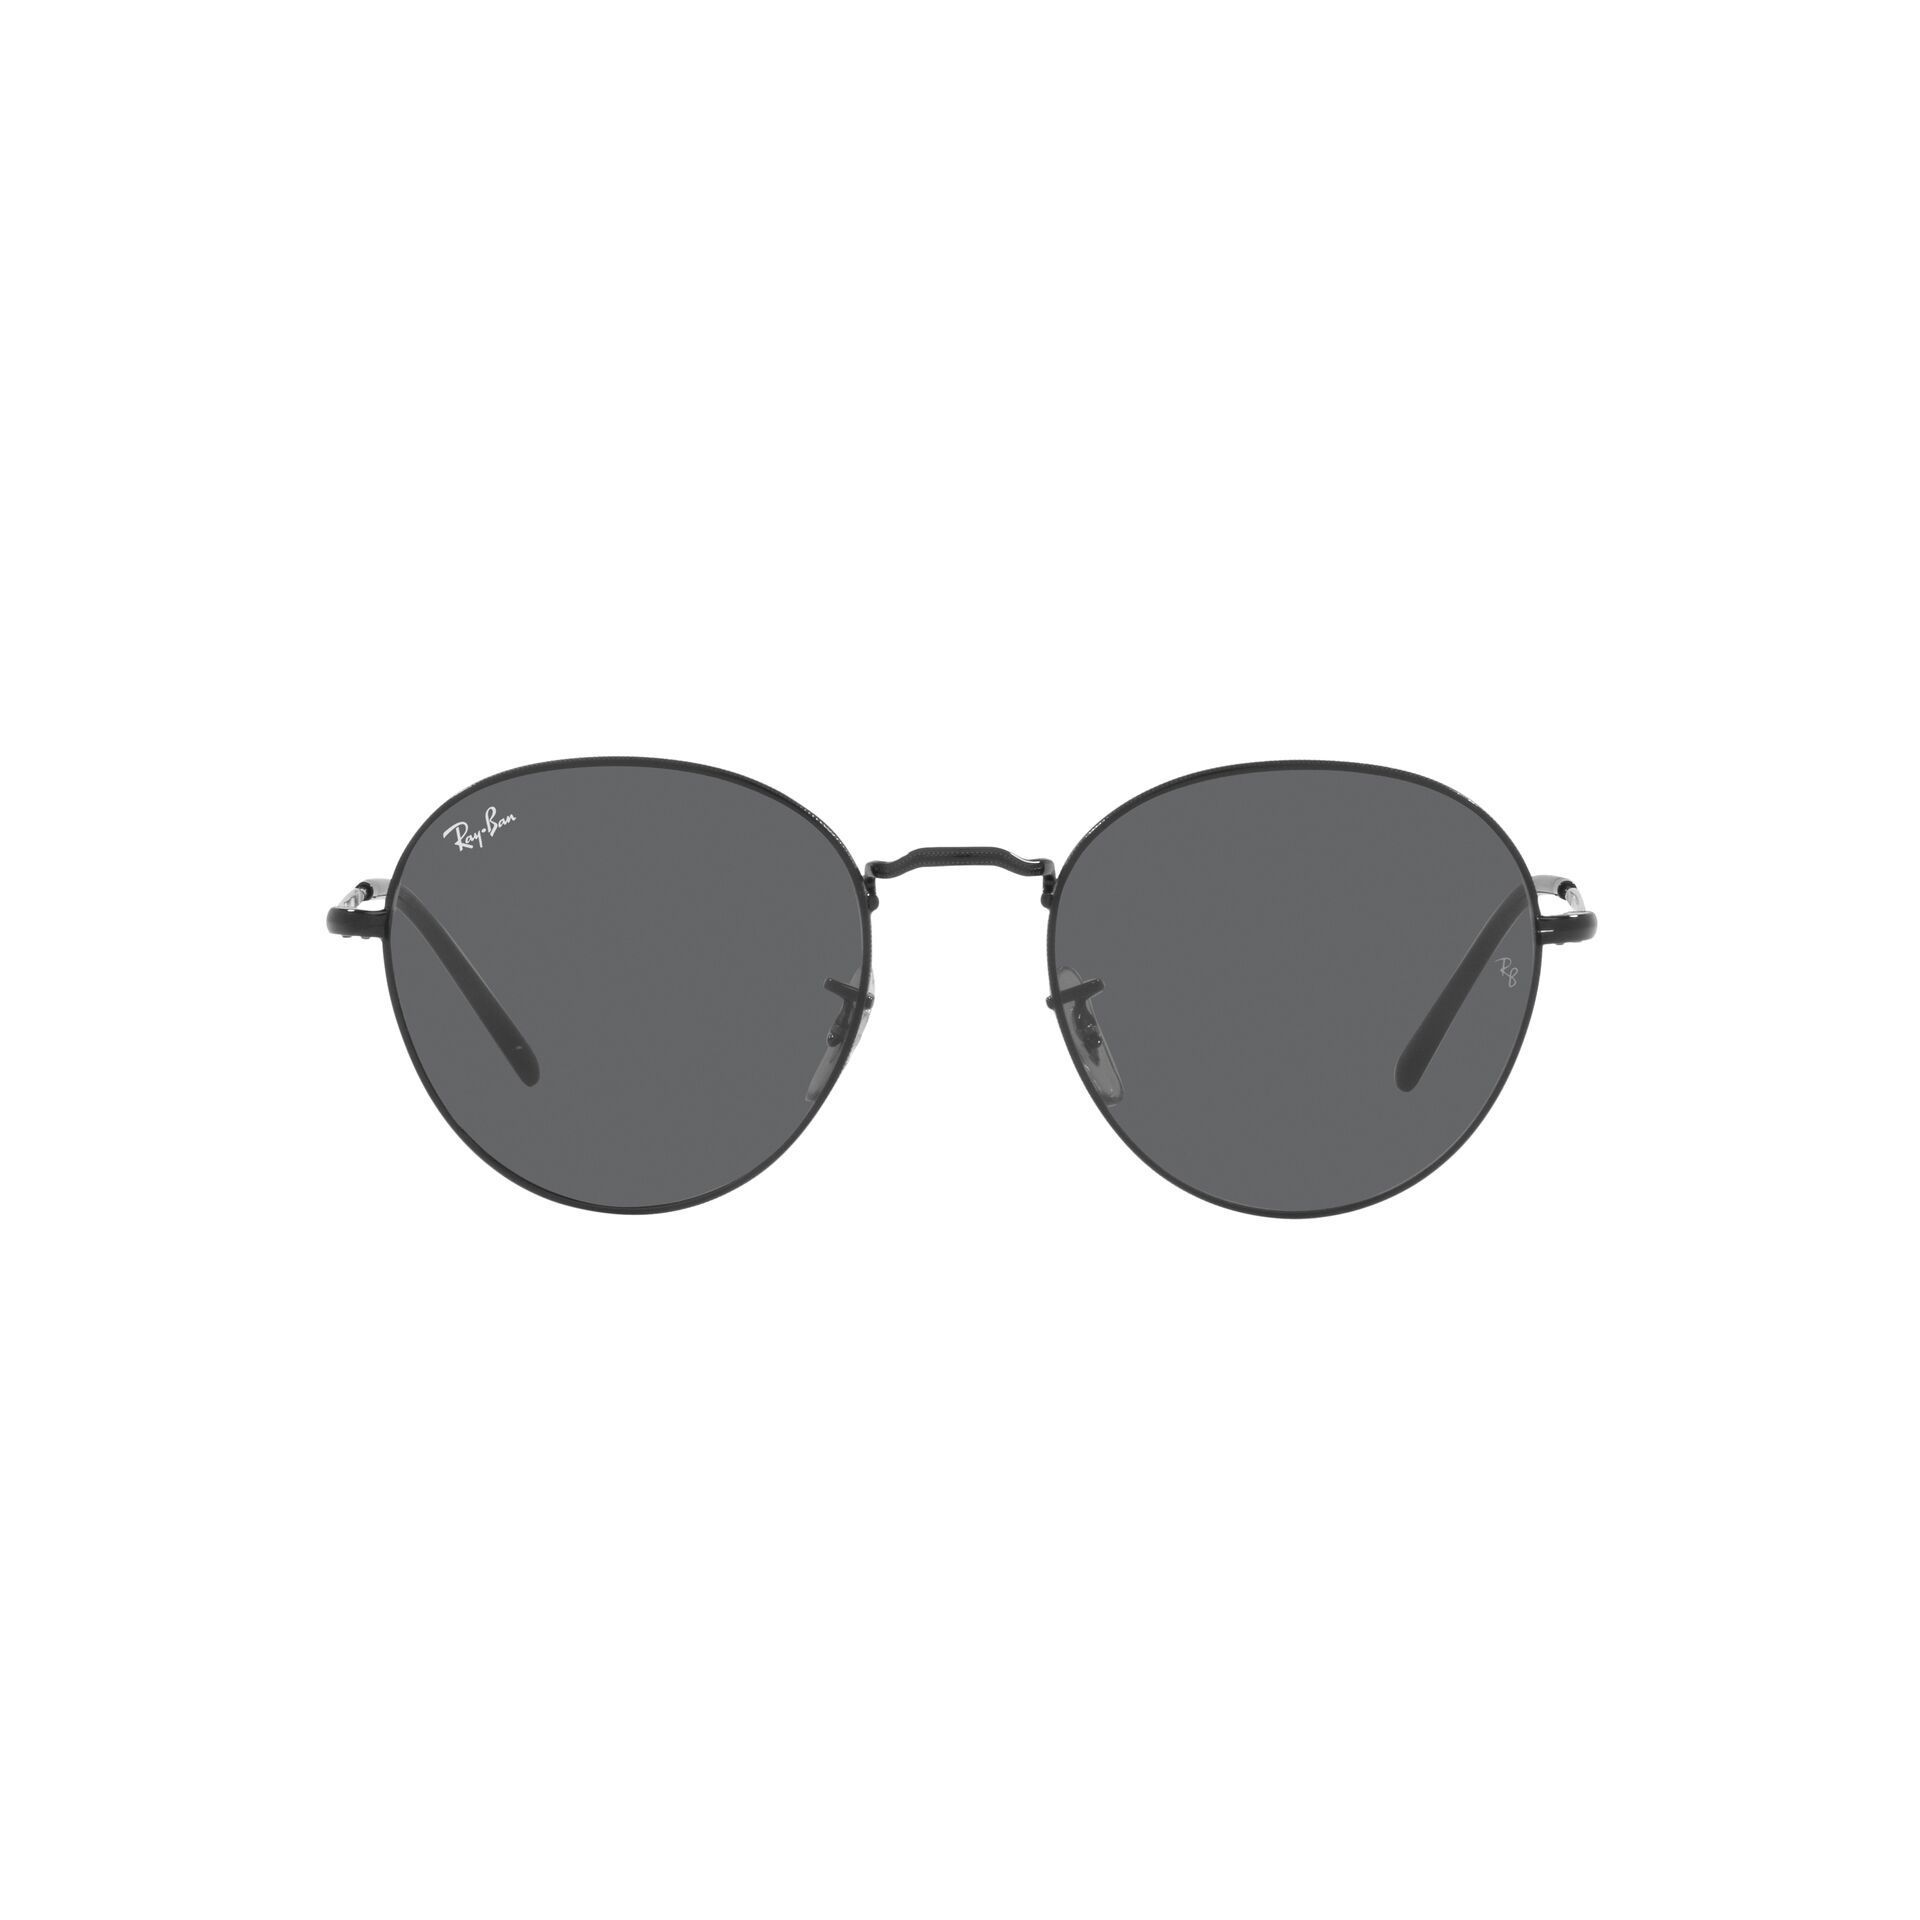 RB3582 Round Sunglasses 002 B1 - size 51